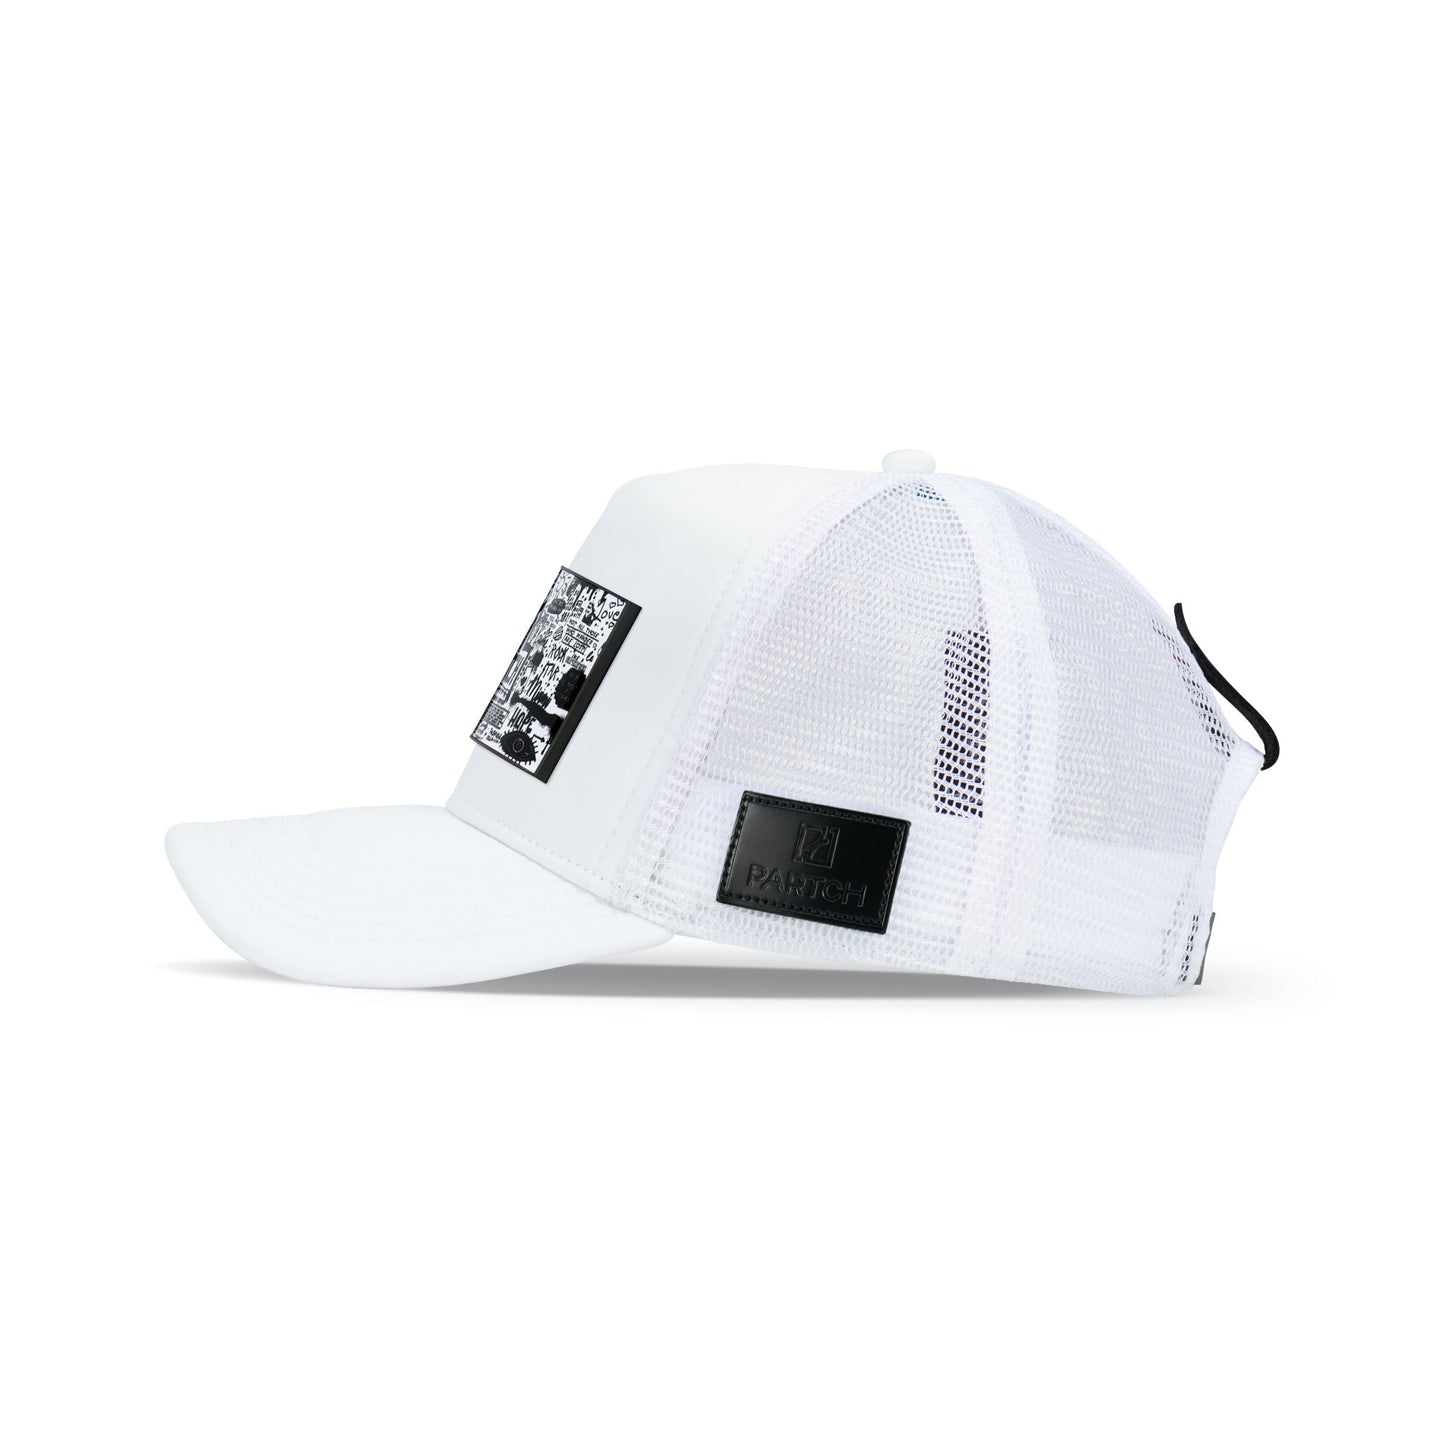 Partch Trucker Hat White with PARTCH-Clip Pop Love Side View